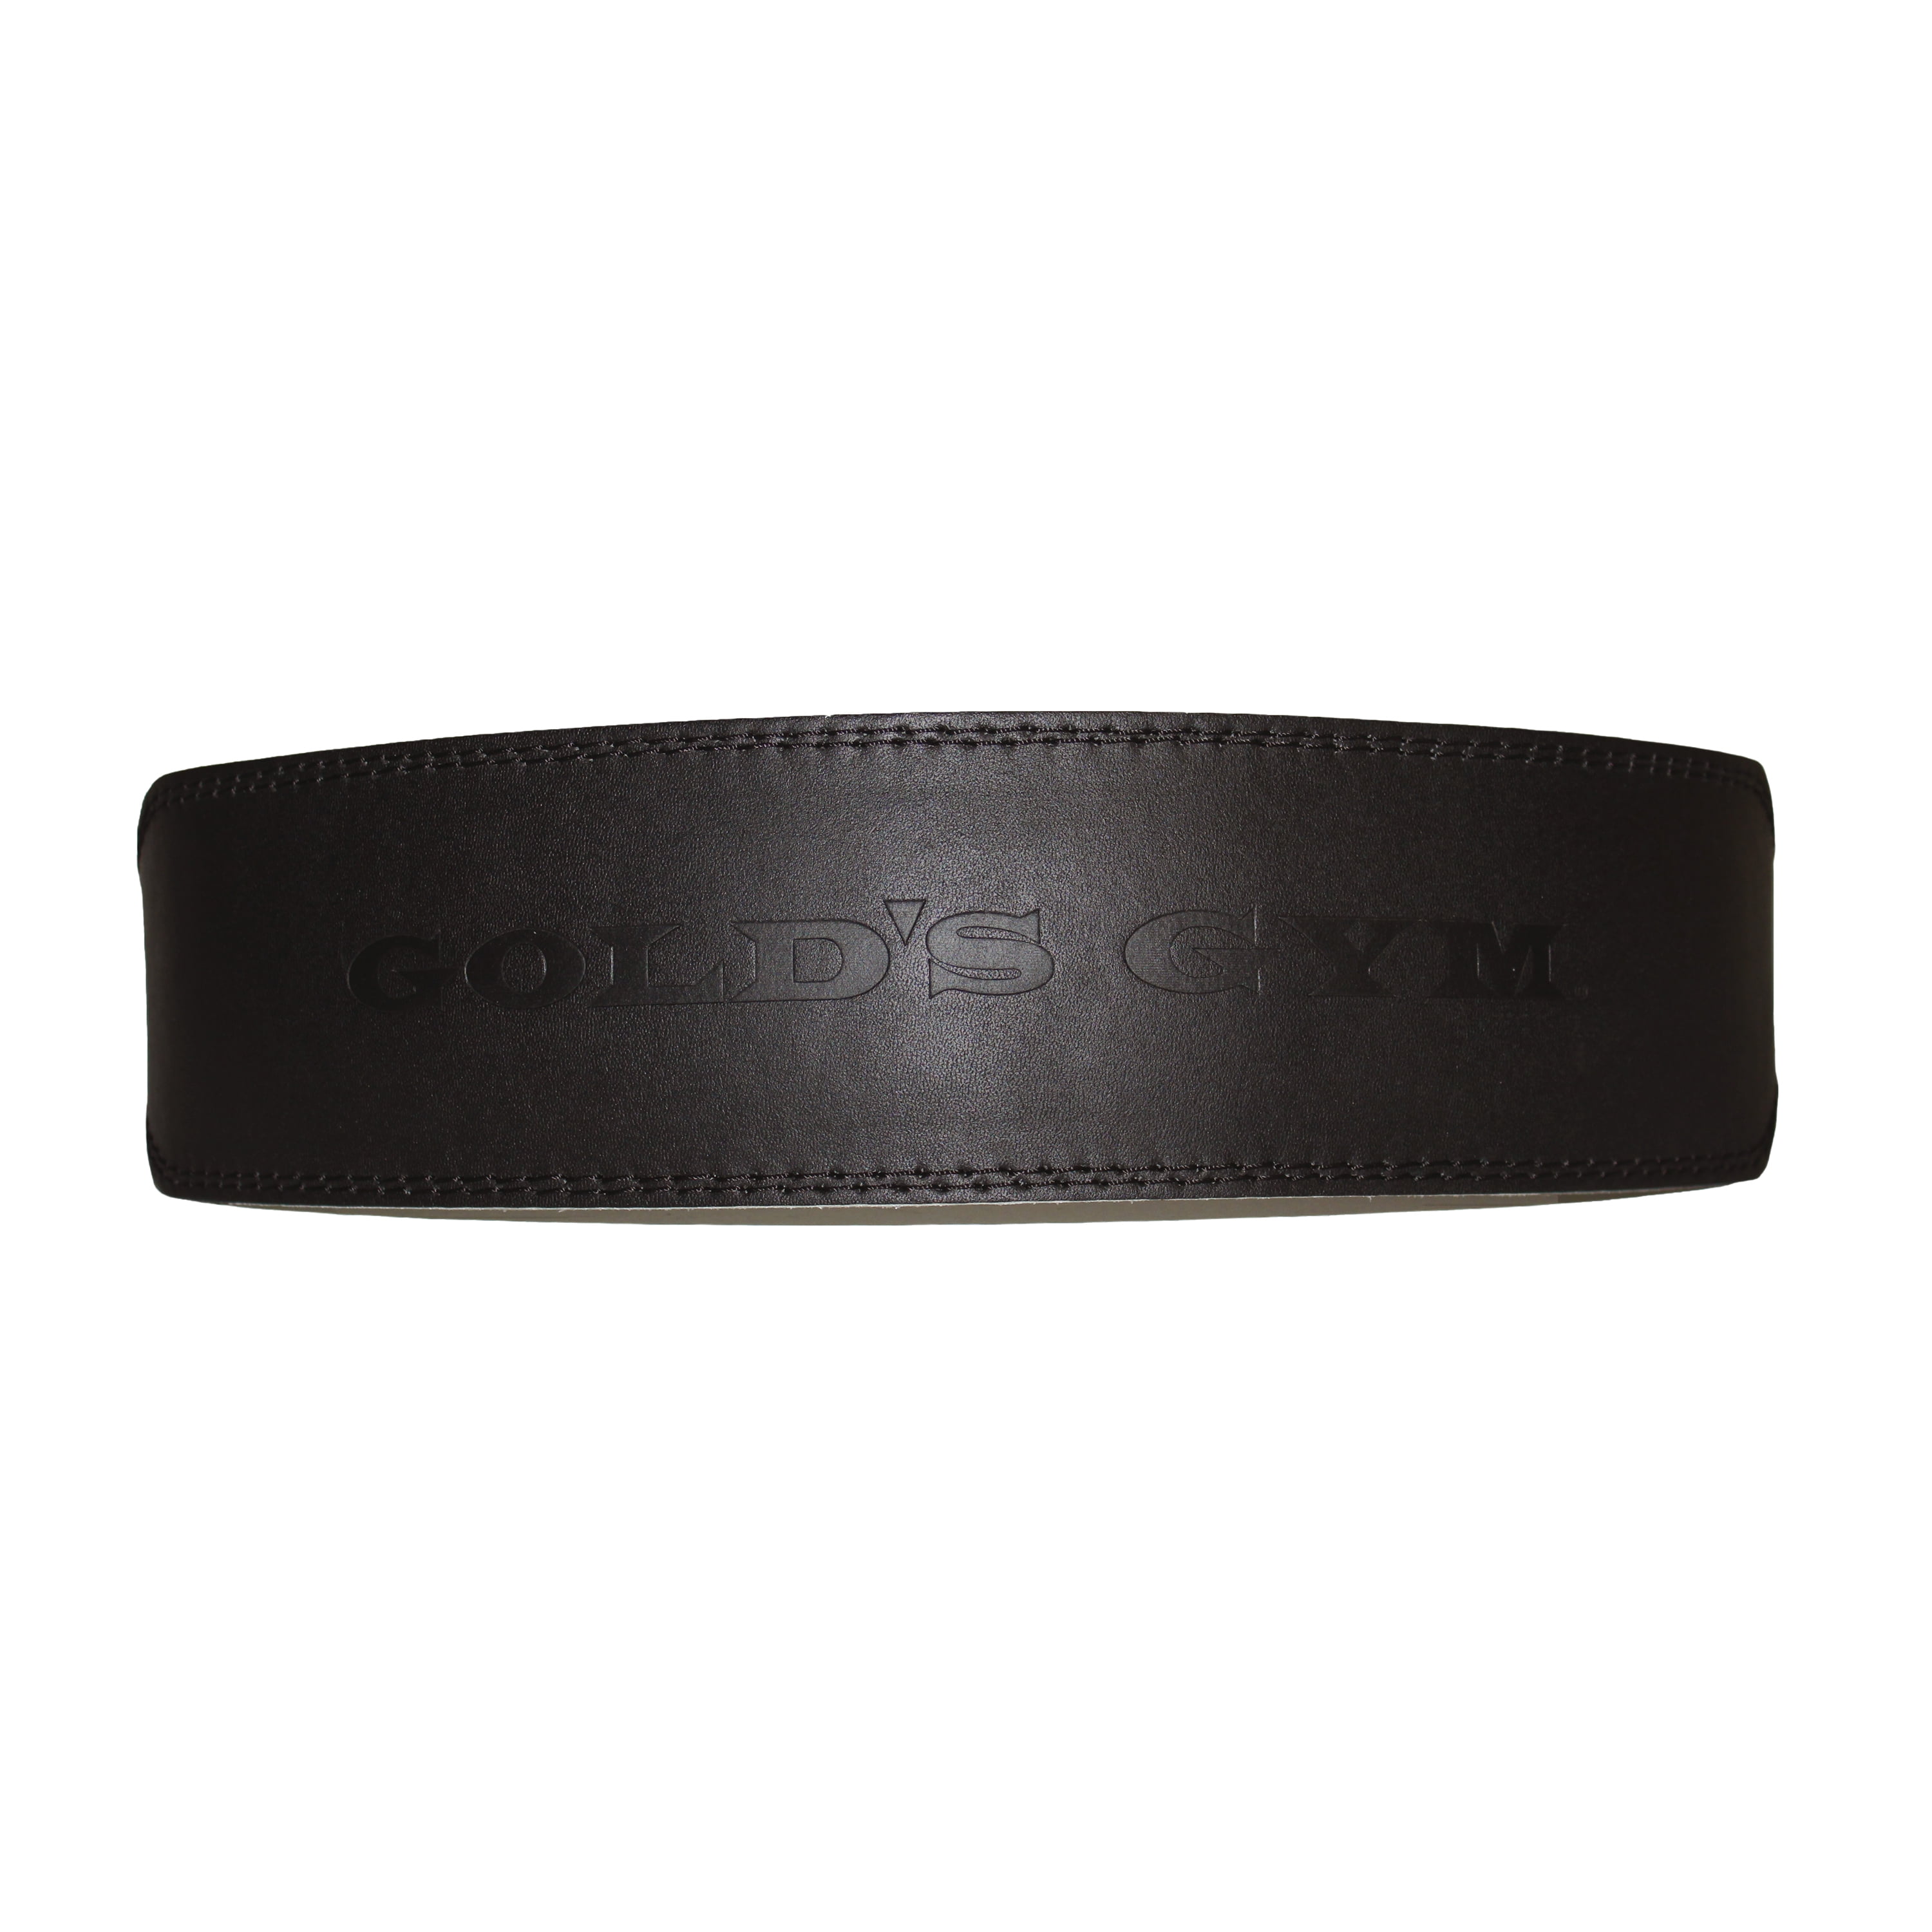 Golds Gym 4" Nylon Weight Lifting Belt Size Small  Black 